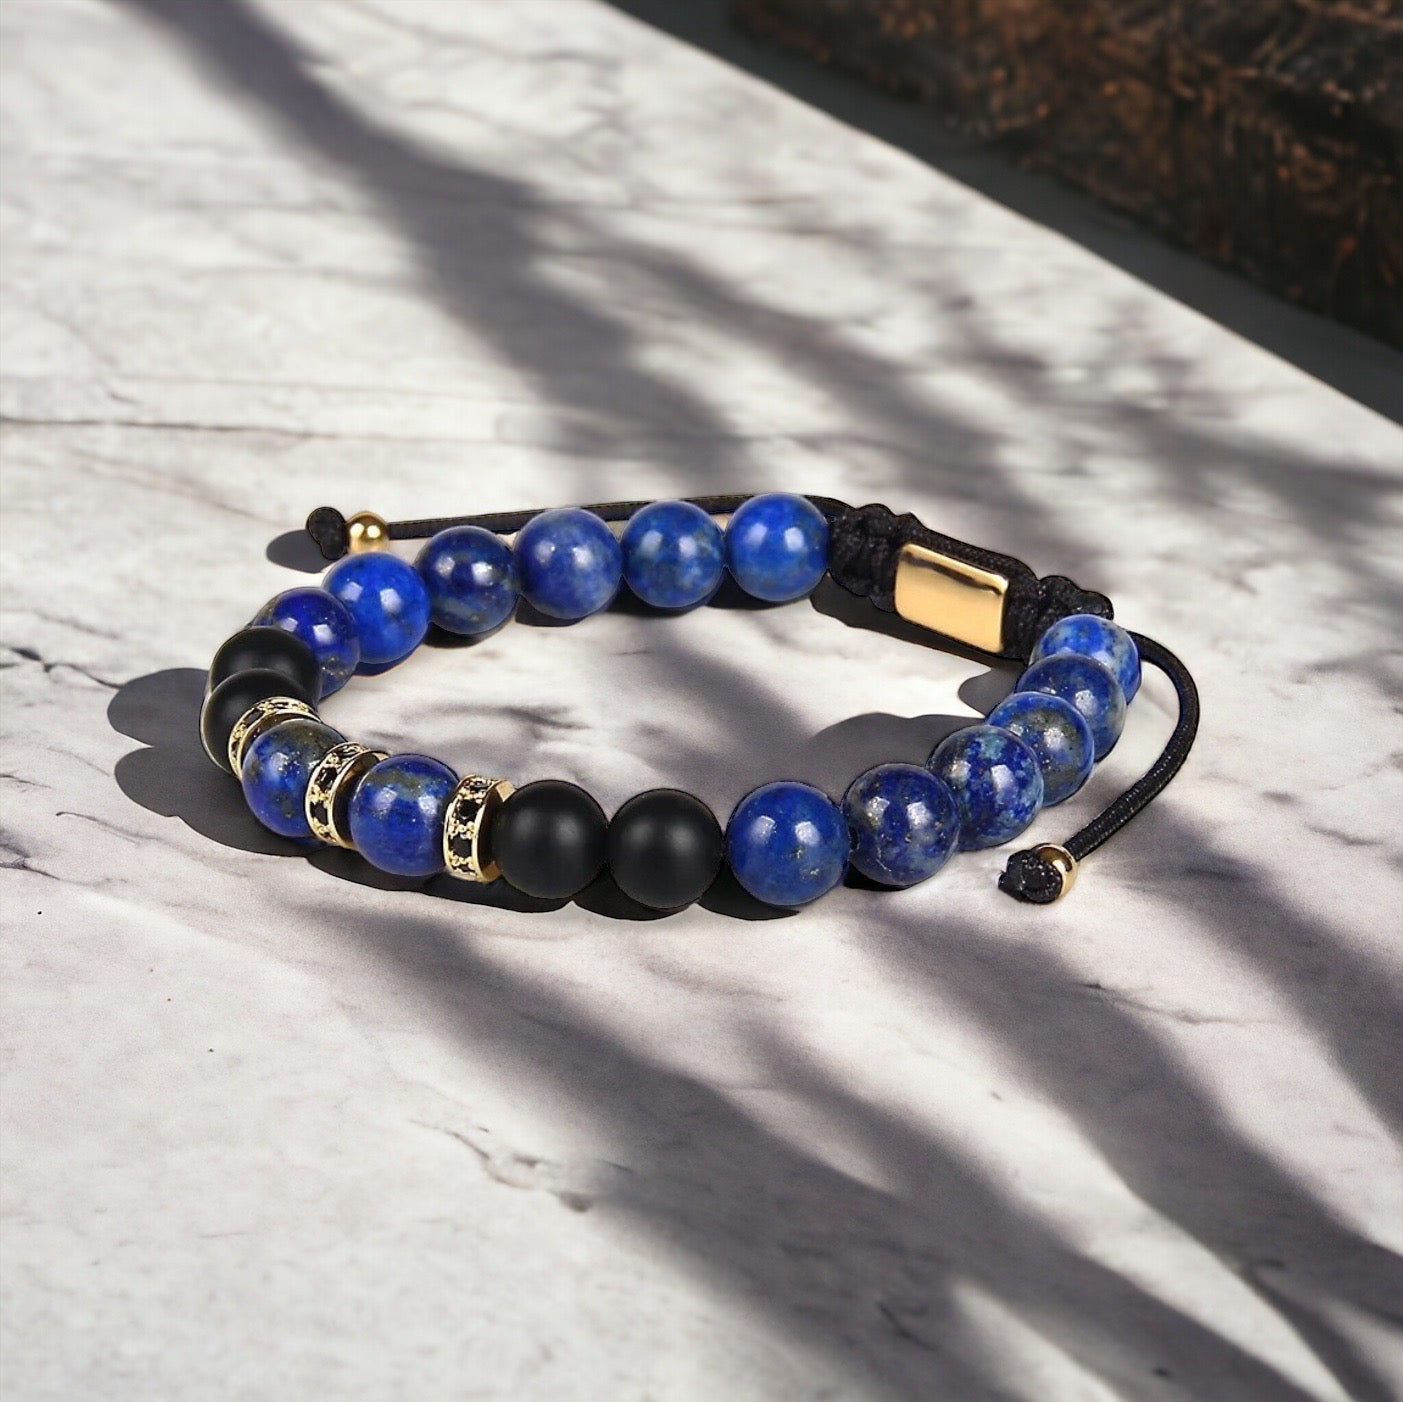 Lapis Lazuli & Black Onyx Beads Bracelet - My Harmony Tree